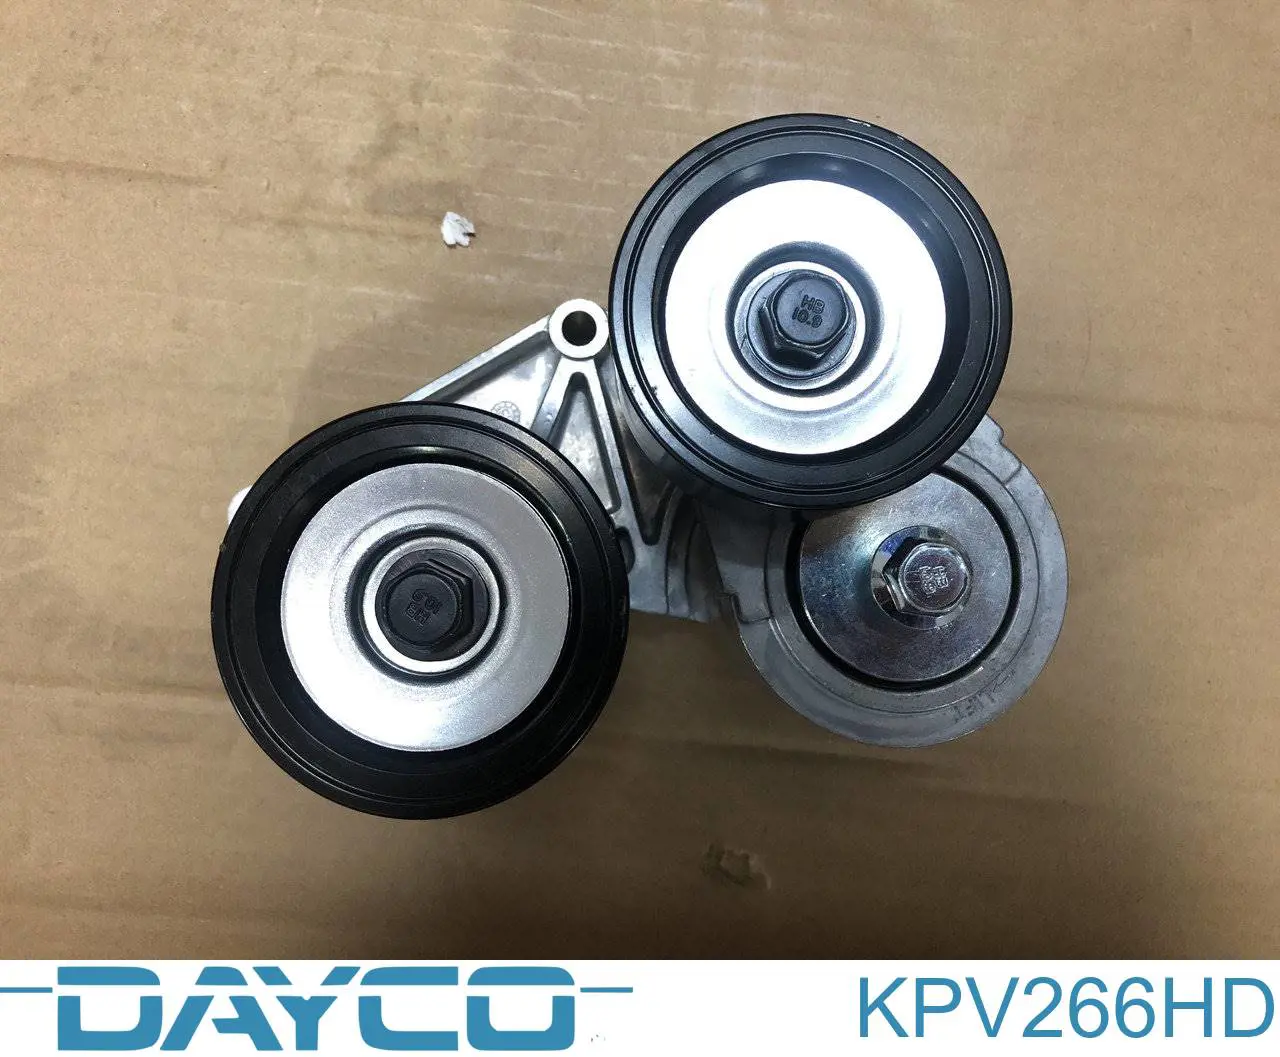 KPV266HD Dayco ремень агрегатов приводной, комплект